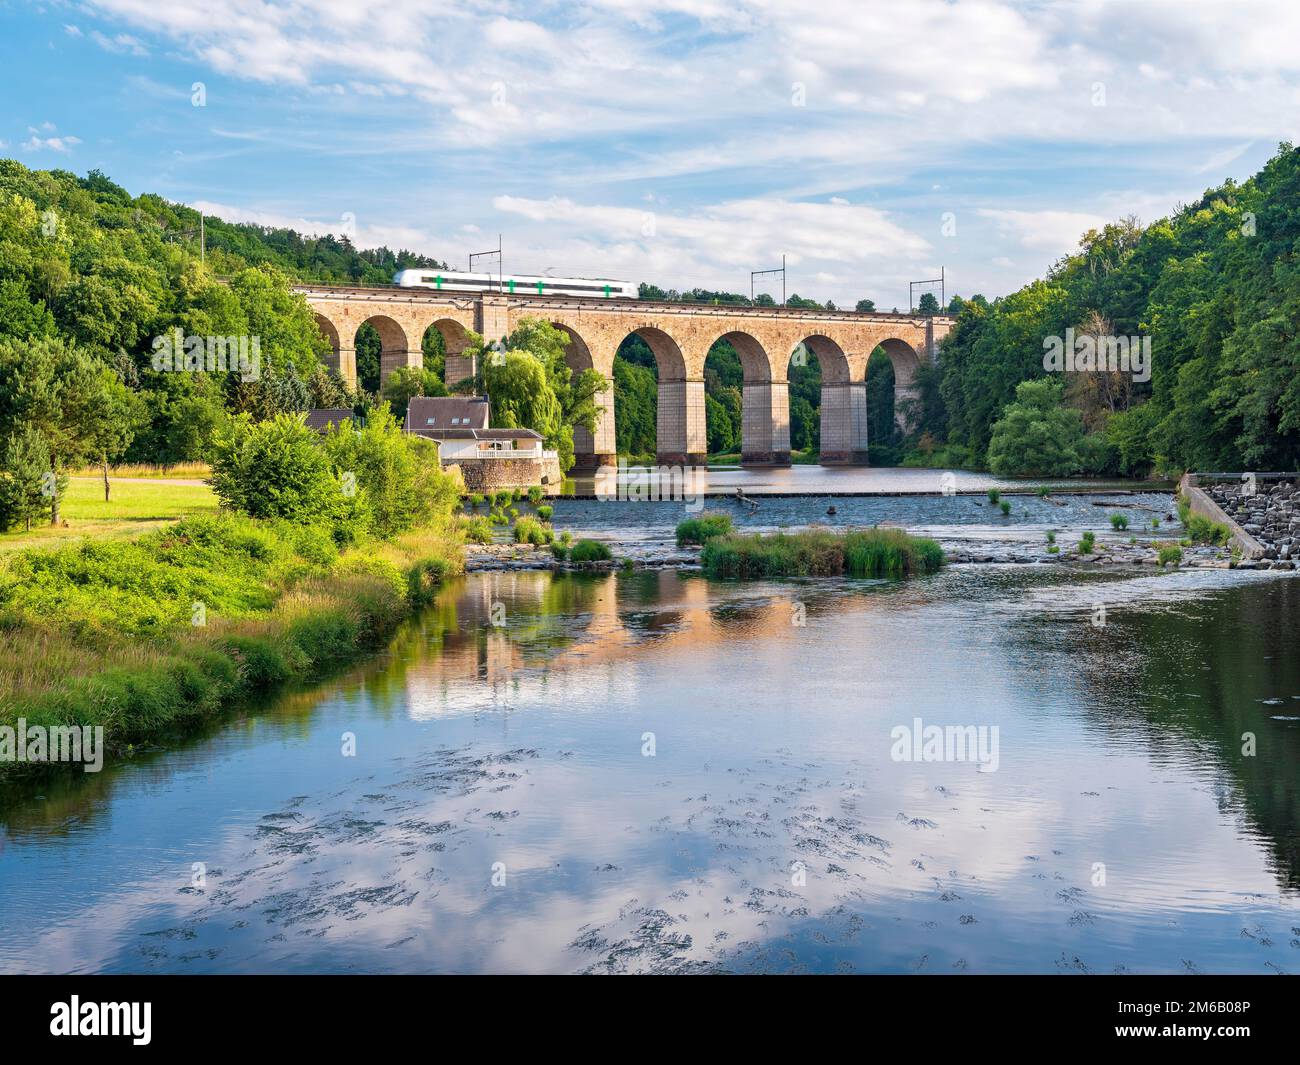 Viaduct Limmritz, railway bridge over the river Zschopau, Doebeln, Saxony, Germany Stock Photo